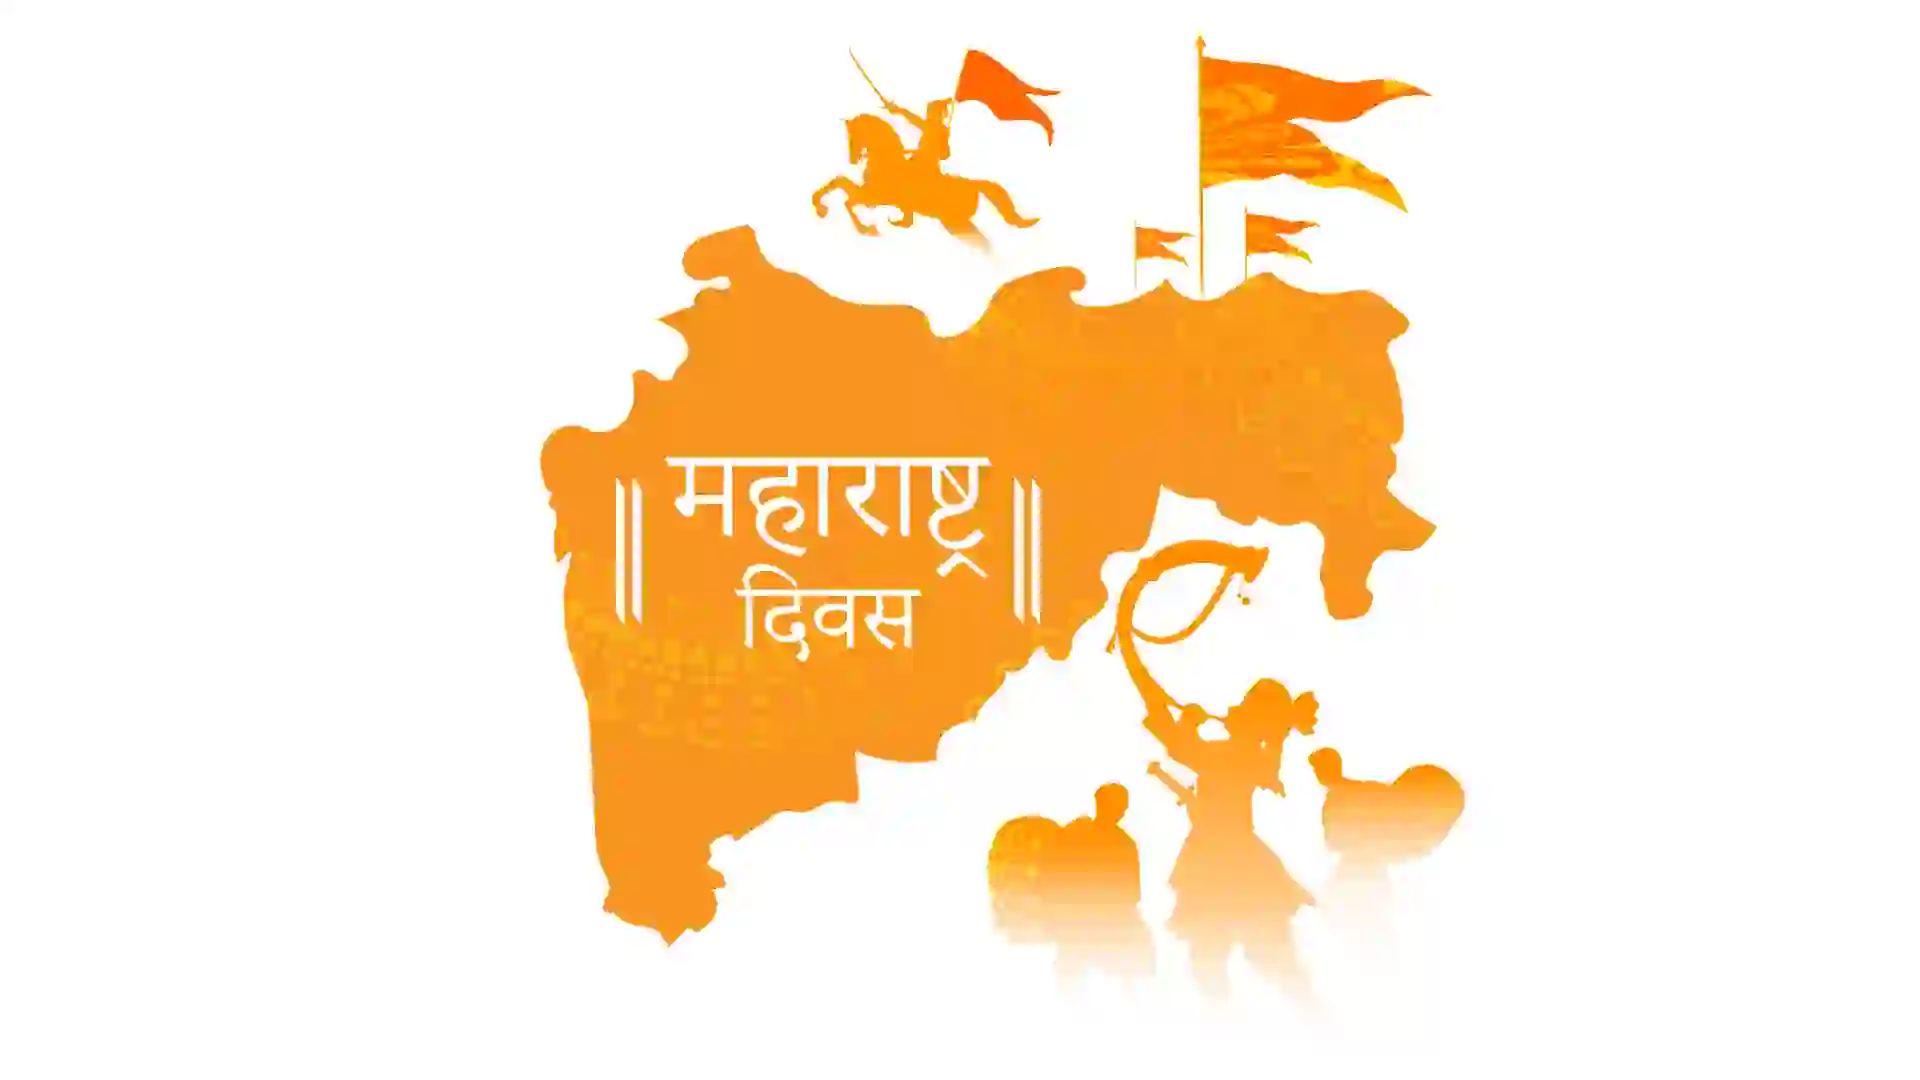 Maharashtra Day This Post Design By The Revolution Deshbhakt Hindustani